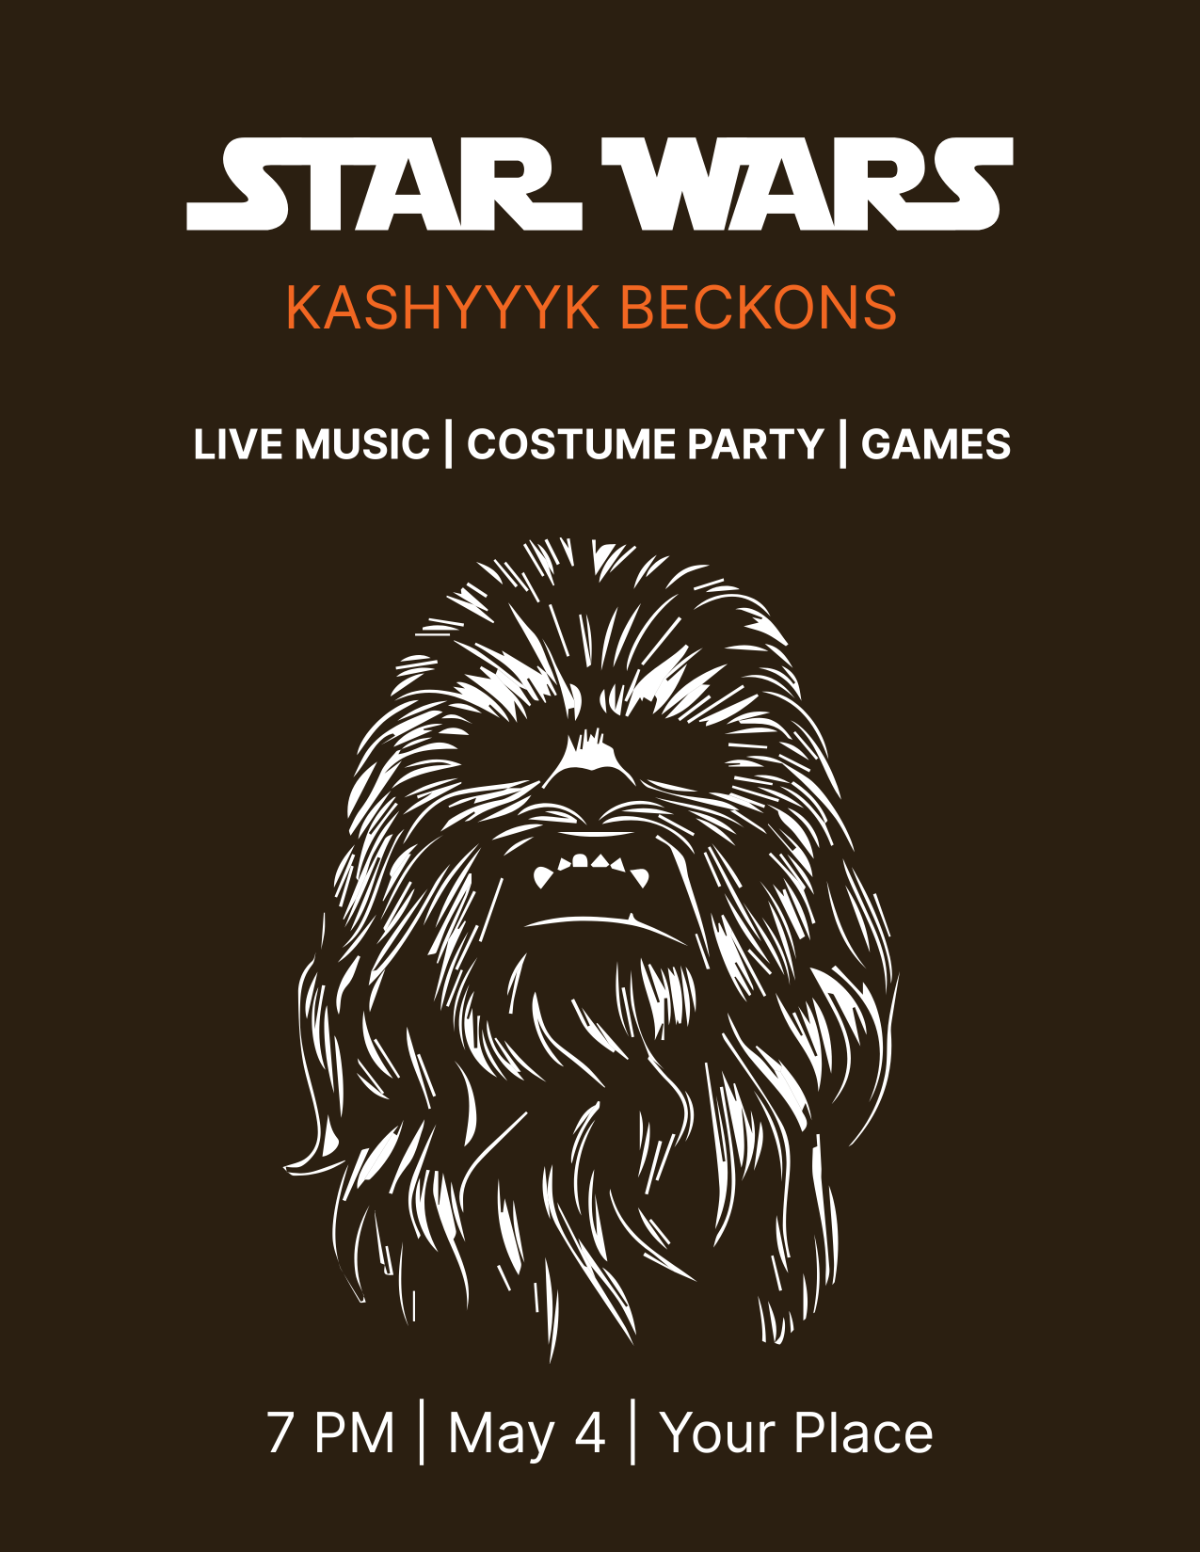 Free Star Wars Wookiee Flyer Template